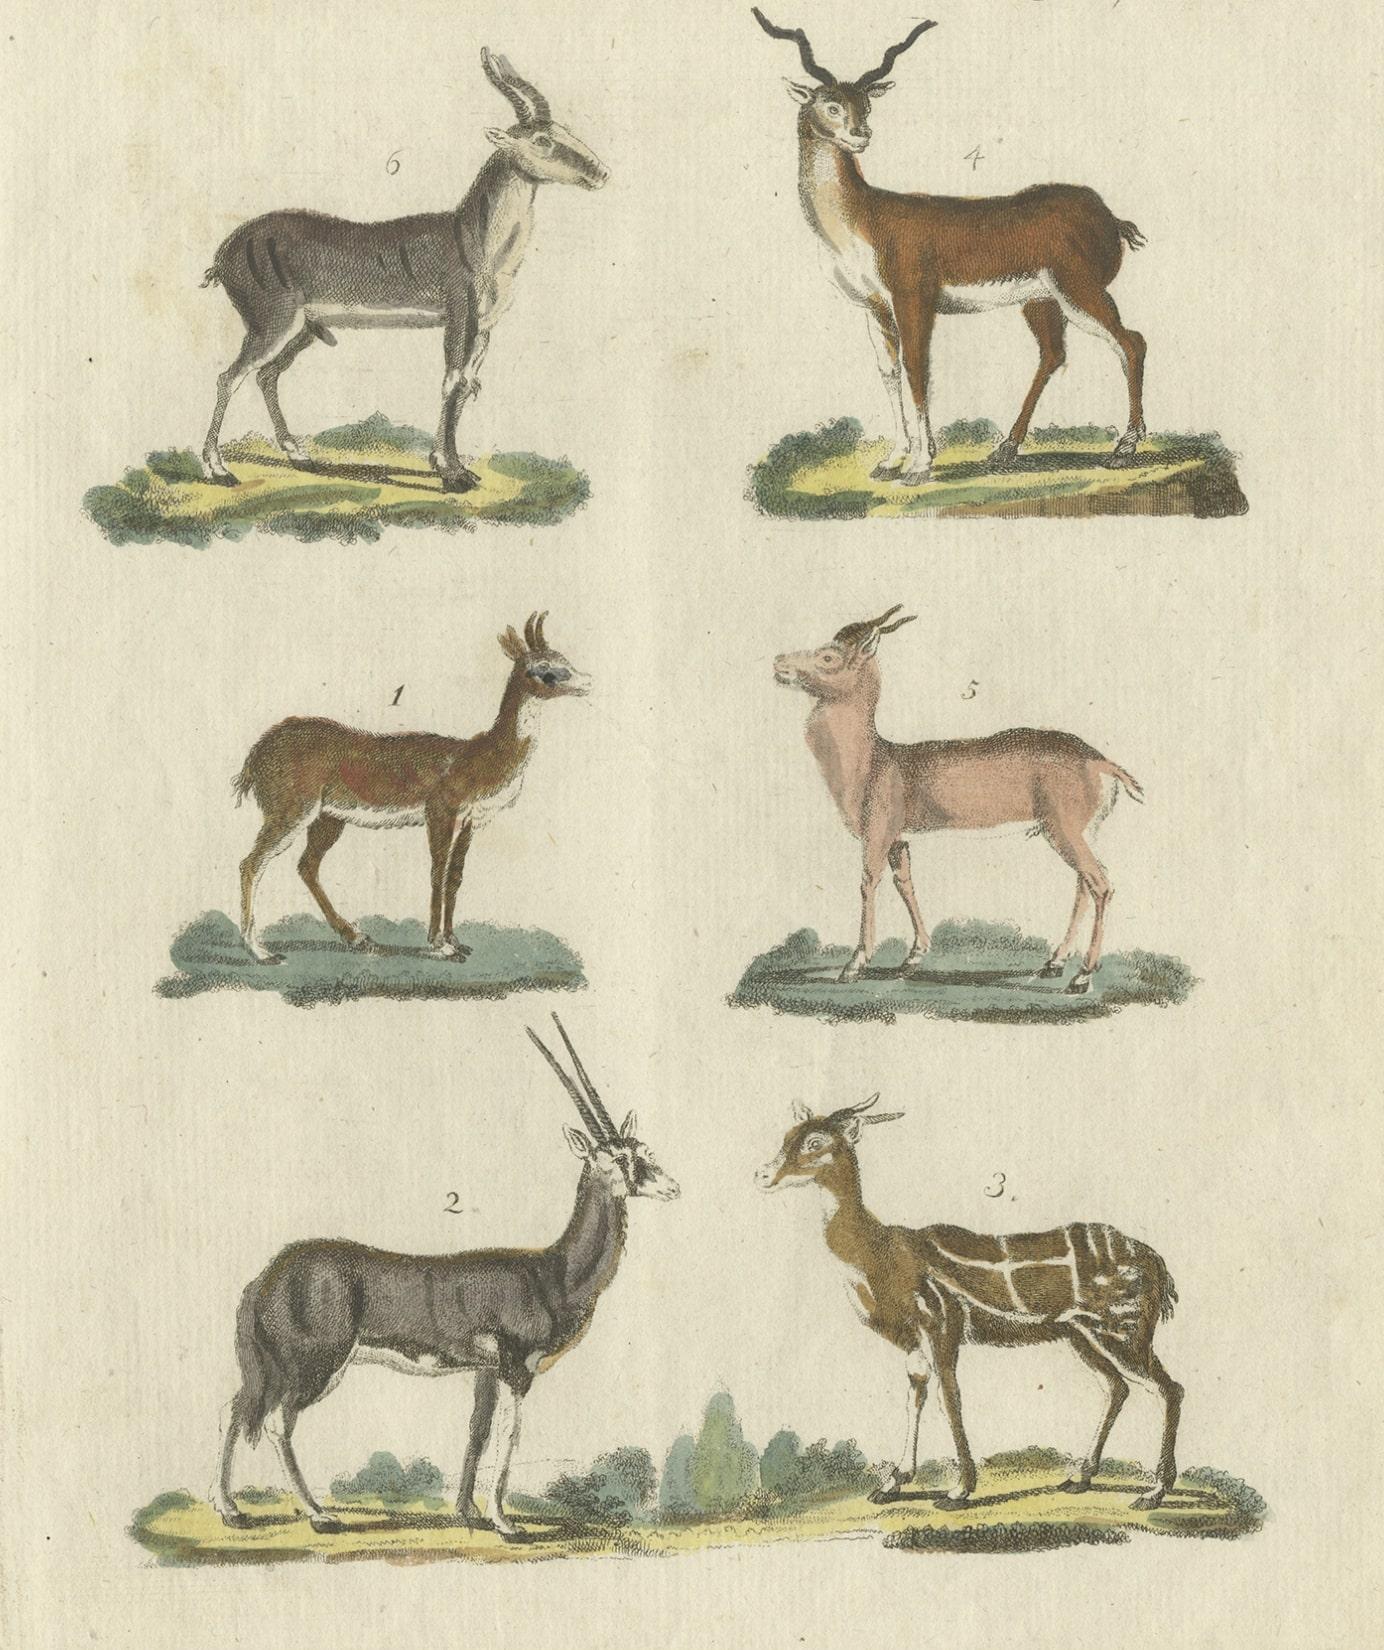 Description: Antique print titled 'Vierv. Dieren XXVII, Quadruped XXVII'. This animal print depicts 1. Antilope Redunca, 2. Antilope Oryx, 3. Antilope Scripta, 4. Antilope Cervicapra, 5. Antilope Gutturosa, 6. Antilope Saiga. This engraved print